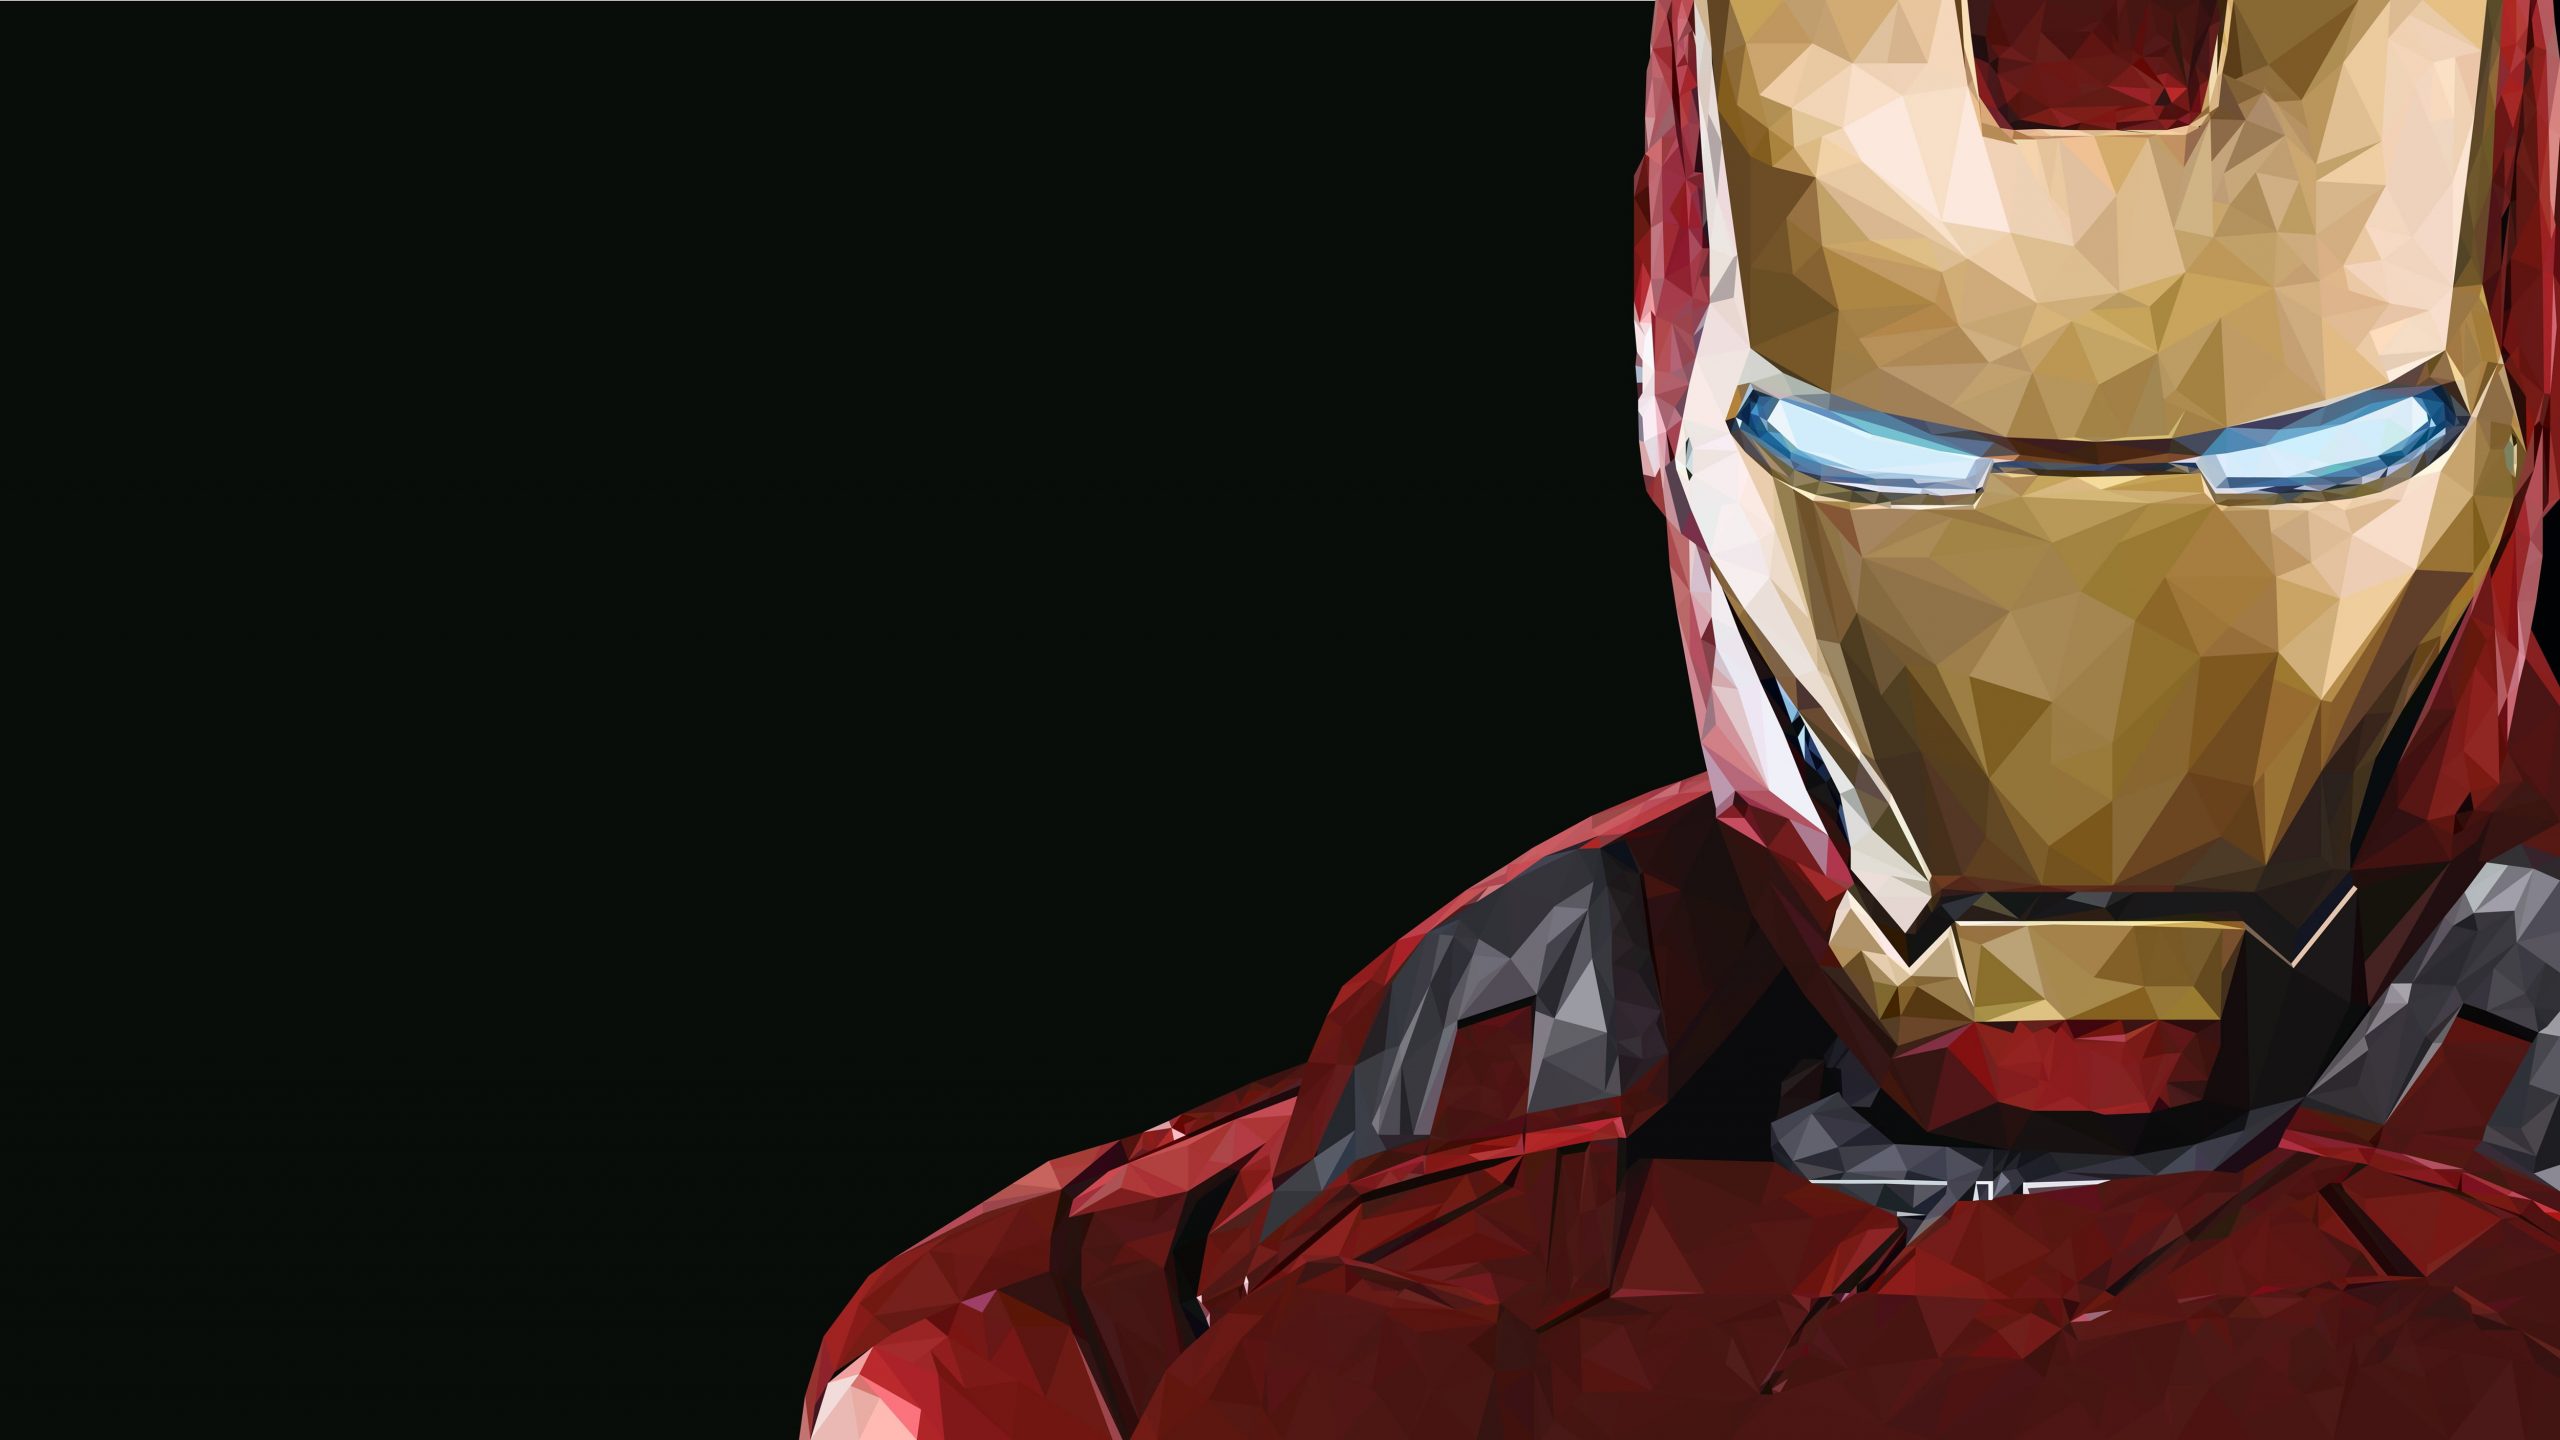 Iron Man Mark 43 wallpaper, Marvel Comics, copy space, black background